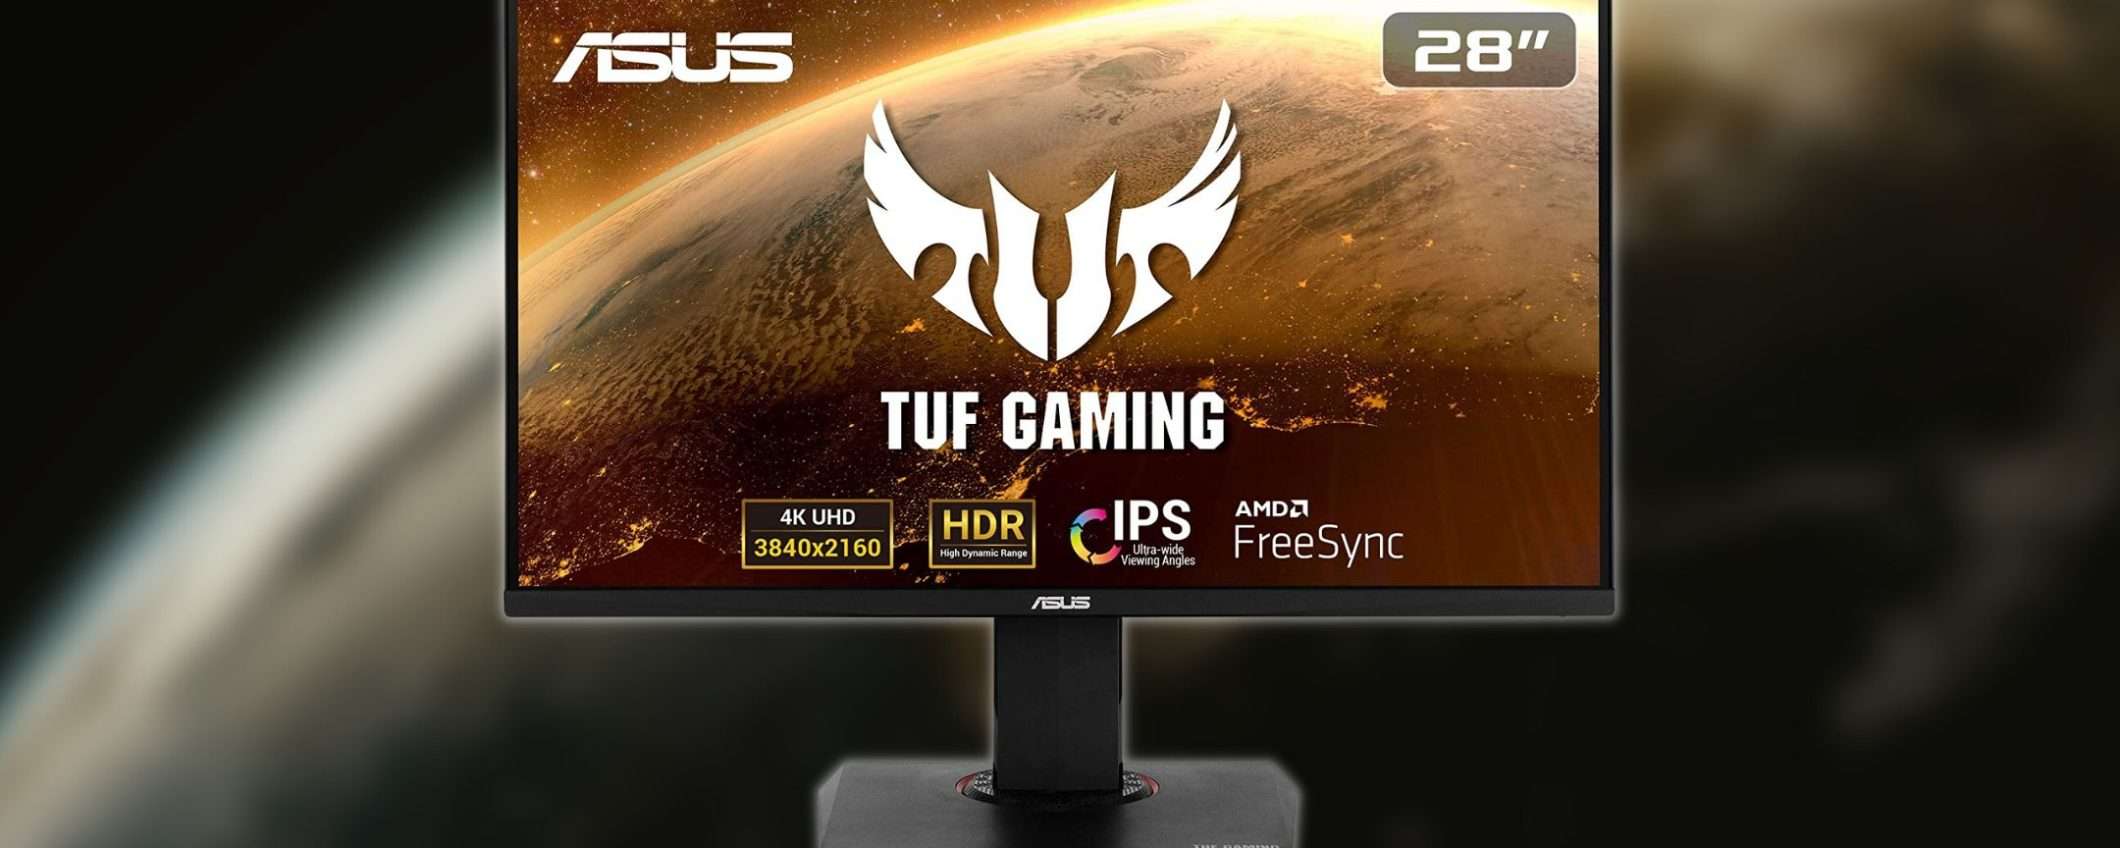 Asus TUF Gaming: la versione 28